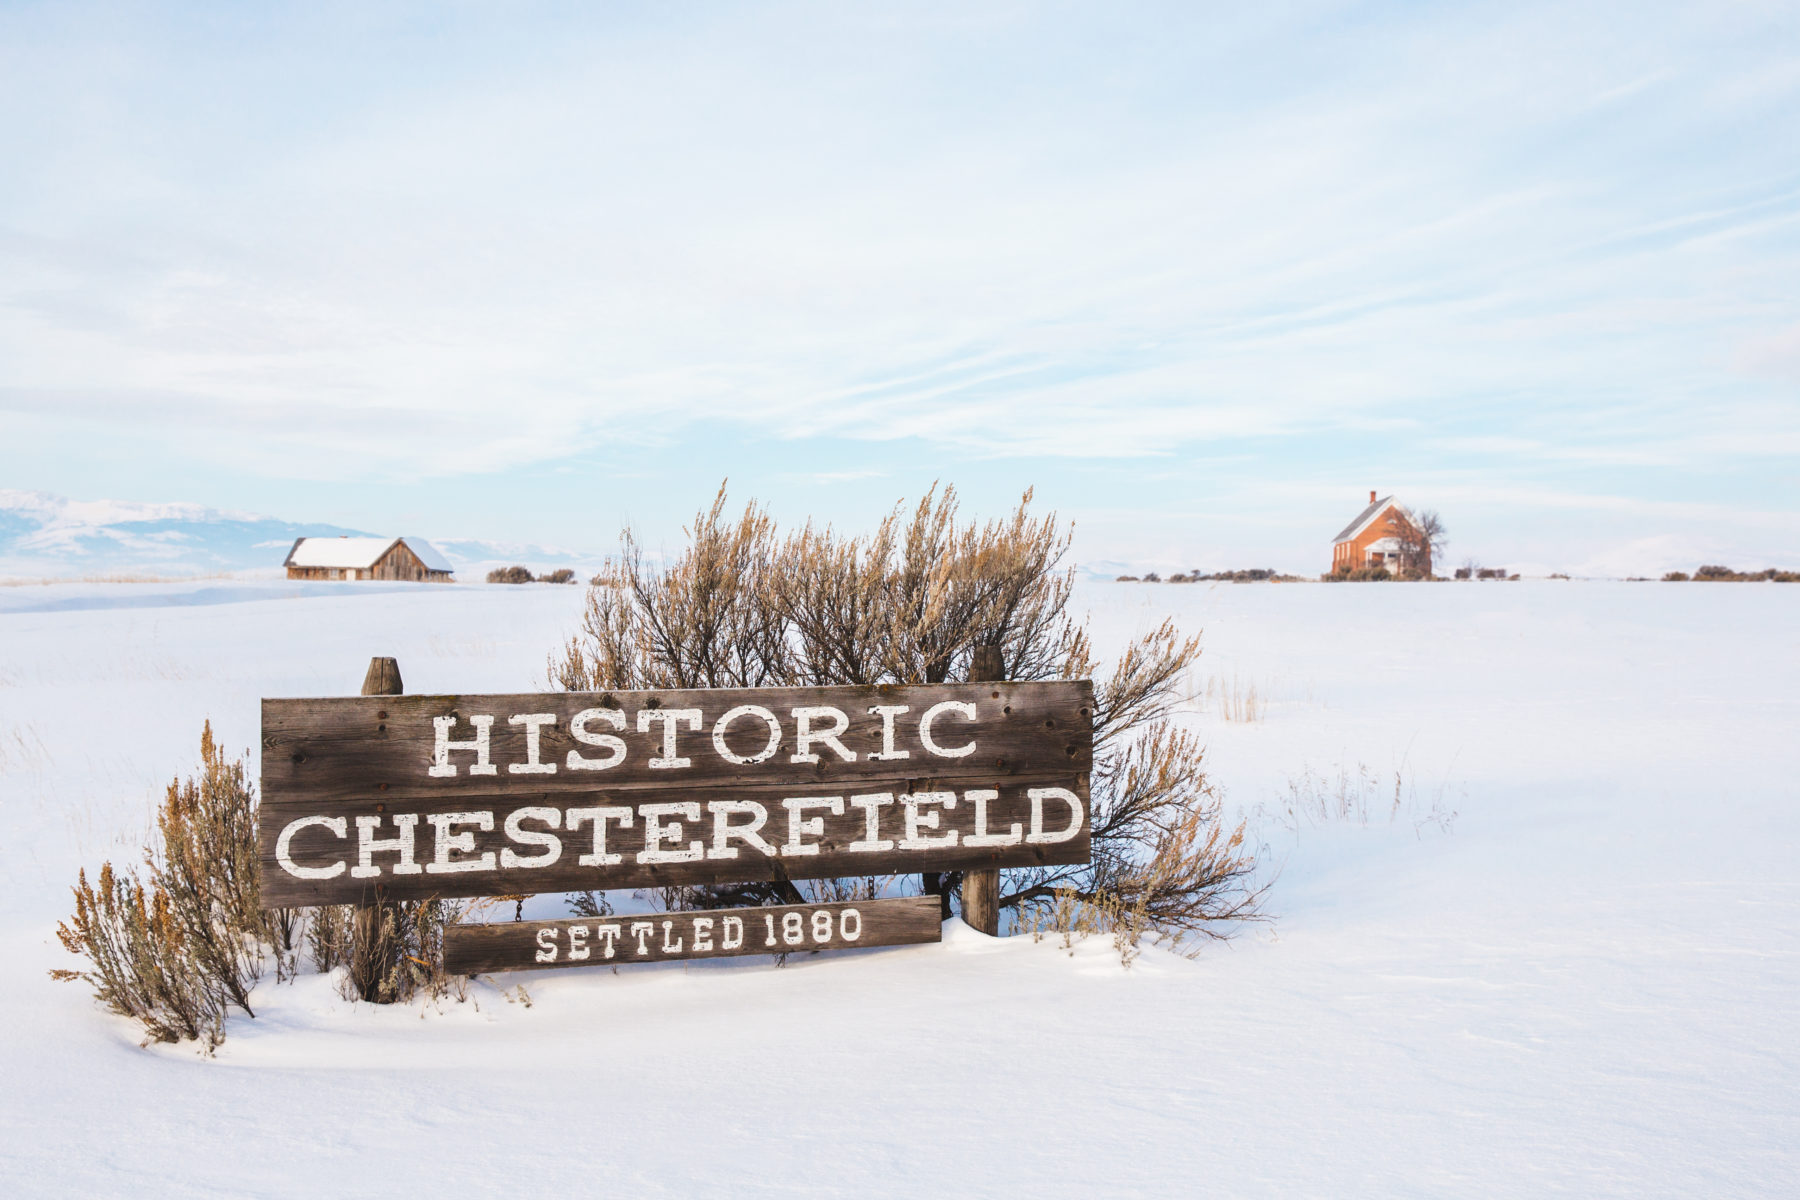 Chesterfield Historic Townsite near Bancroft Idaho